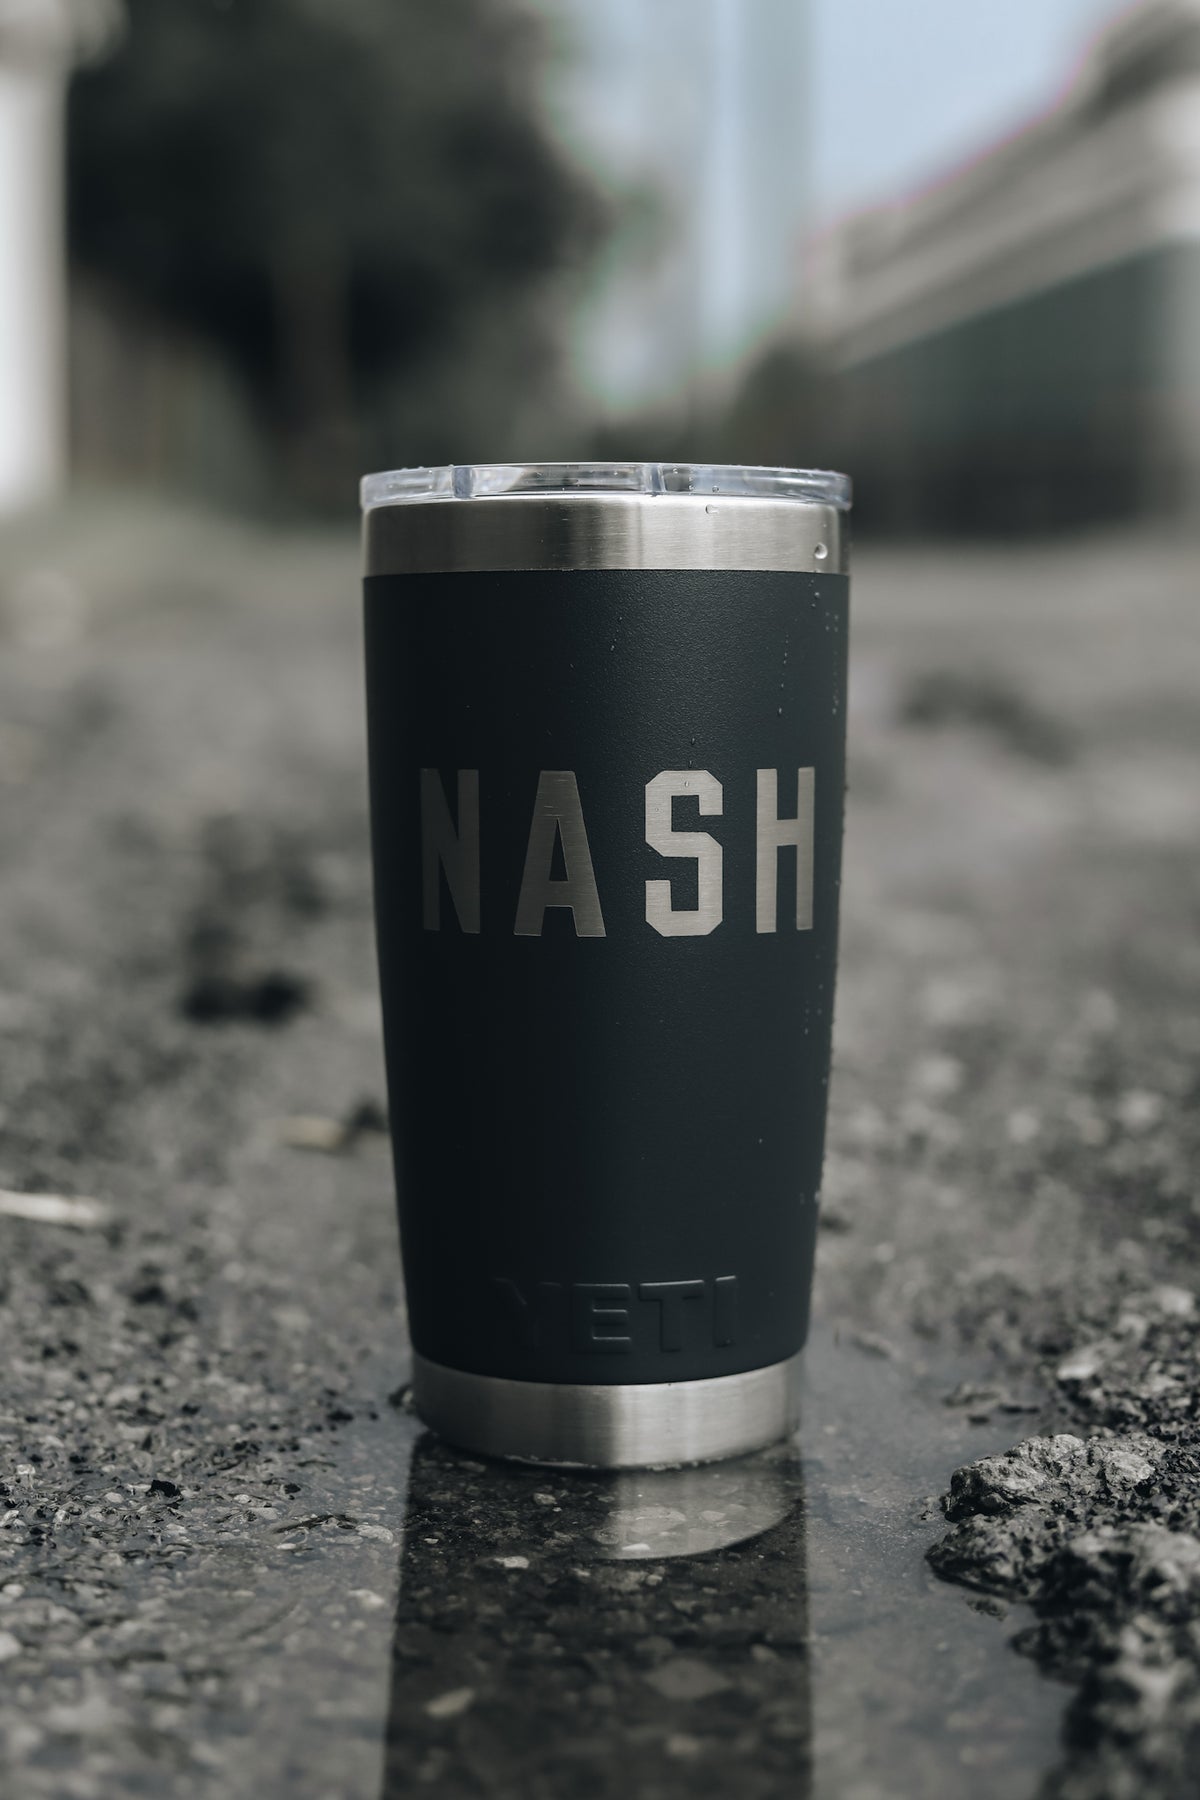 Yeti 20oz Tumbler [Camp Green] – The Nash Collection